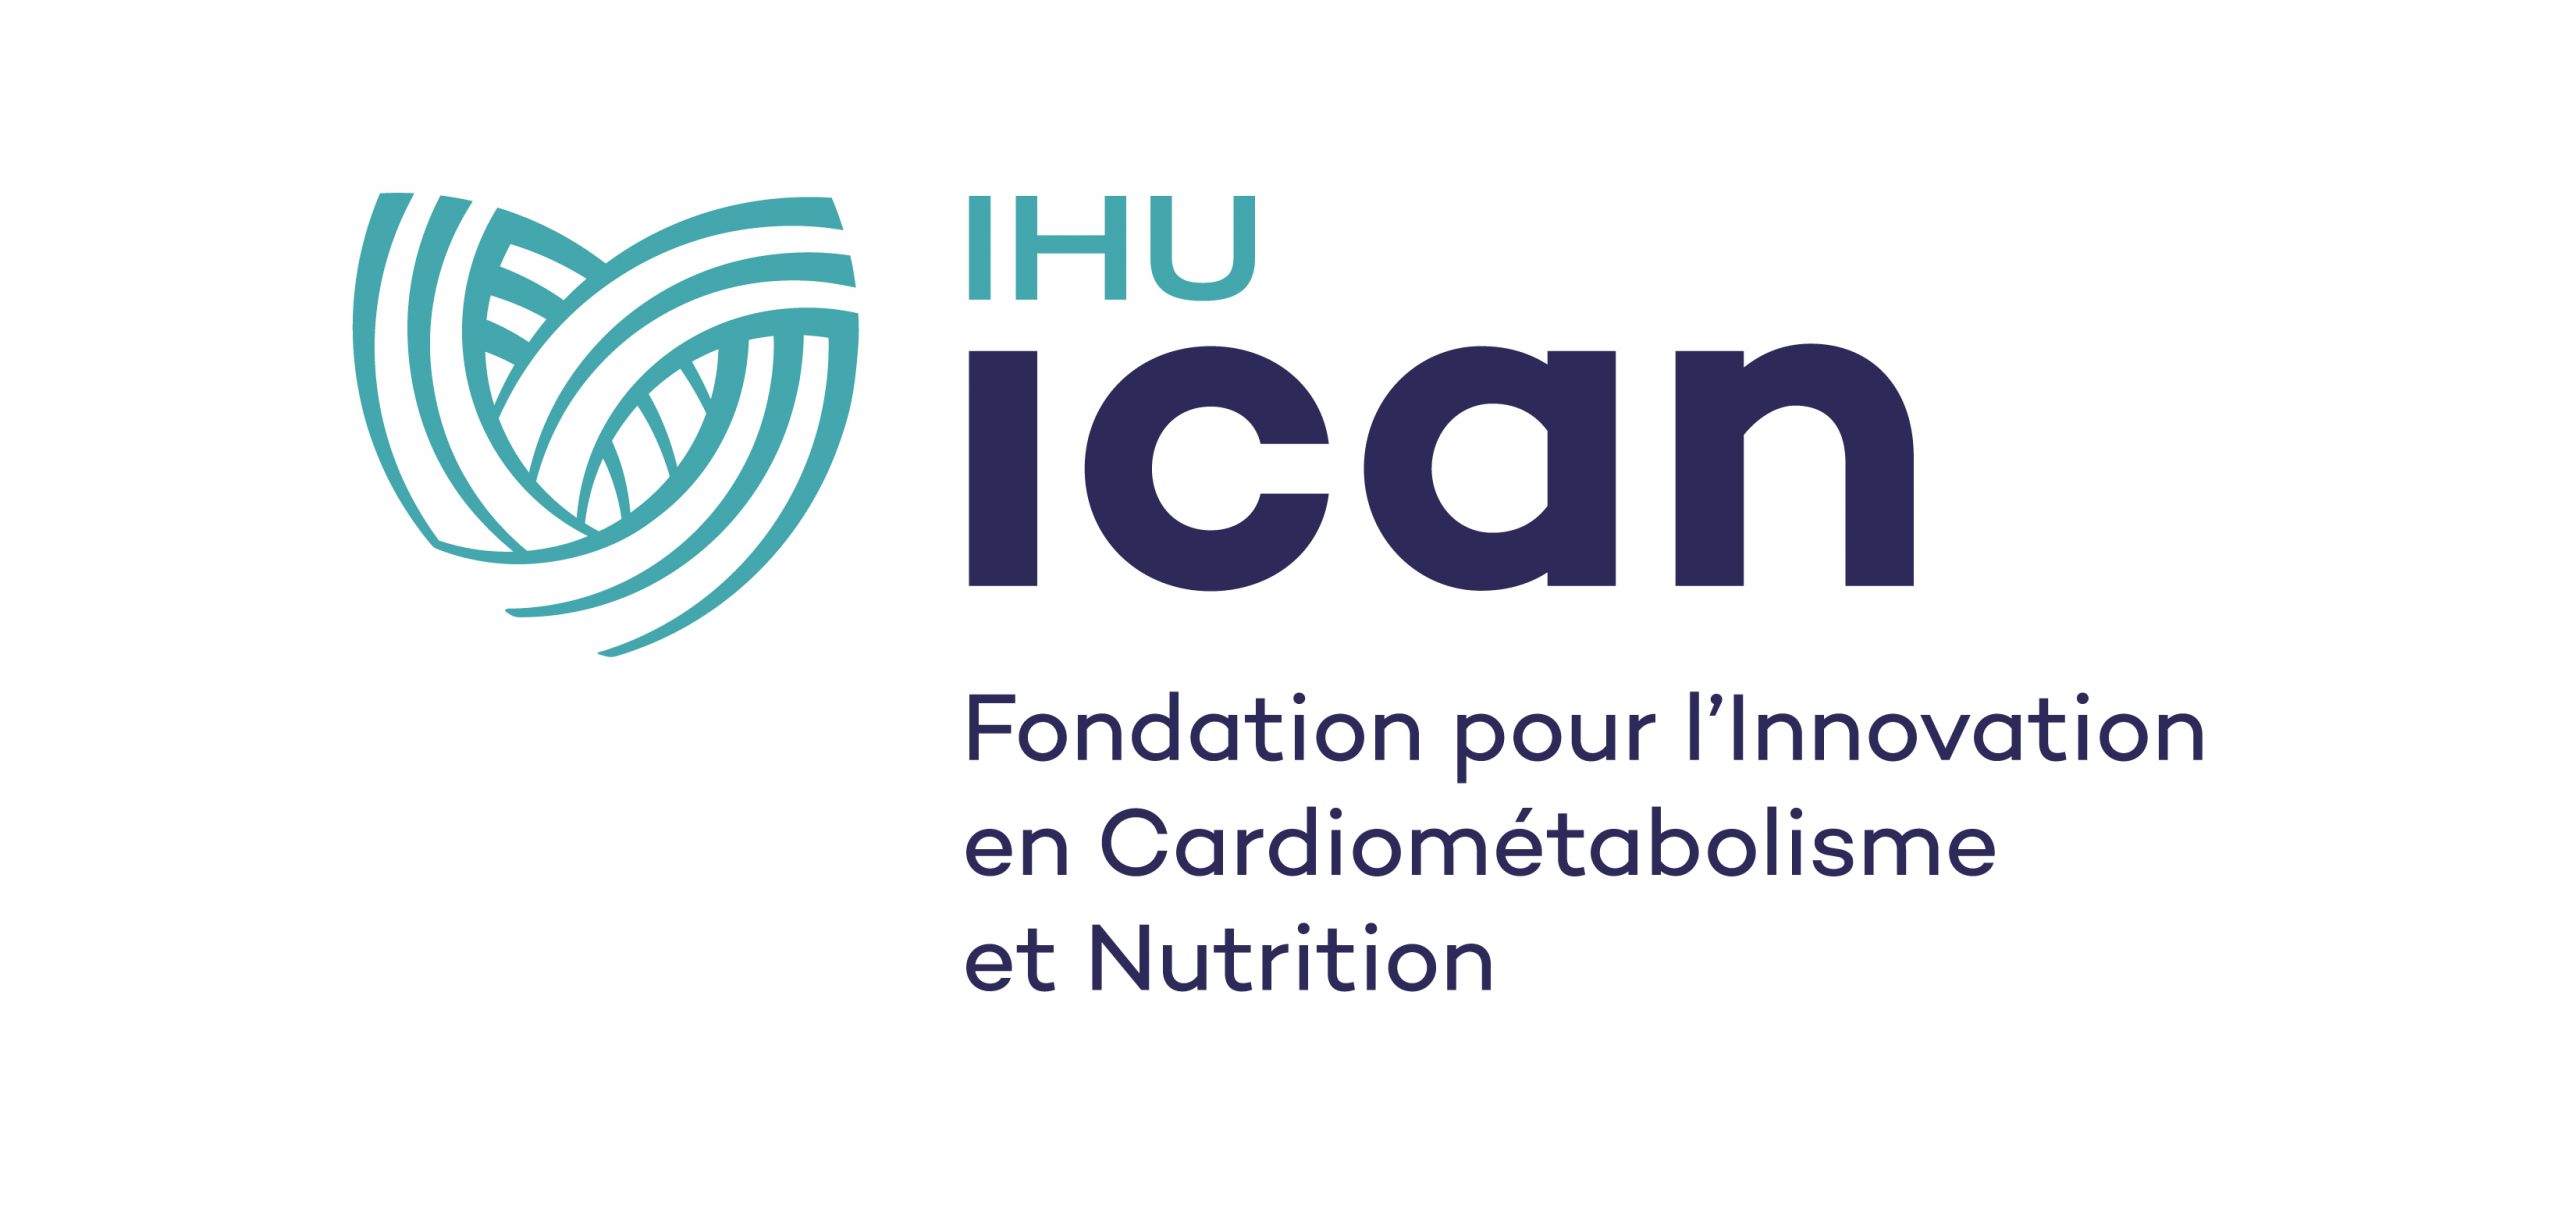 IHU-ICAN logo UMRS 1166